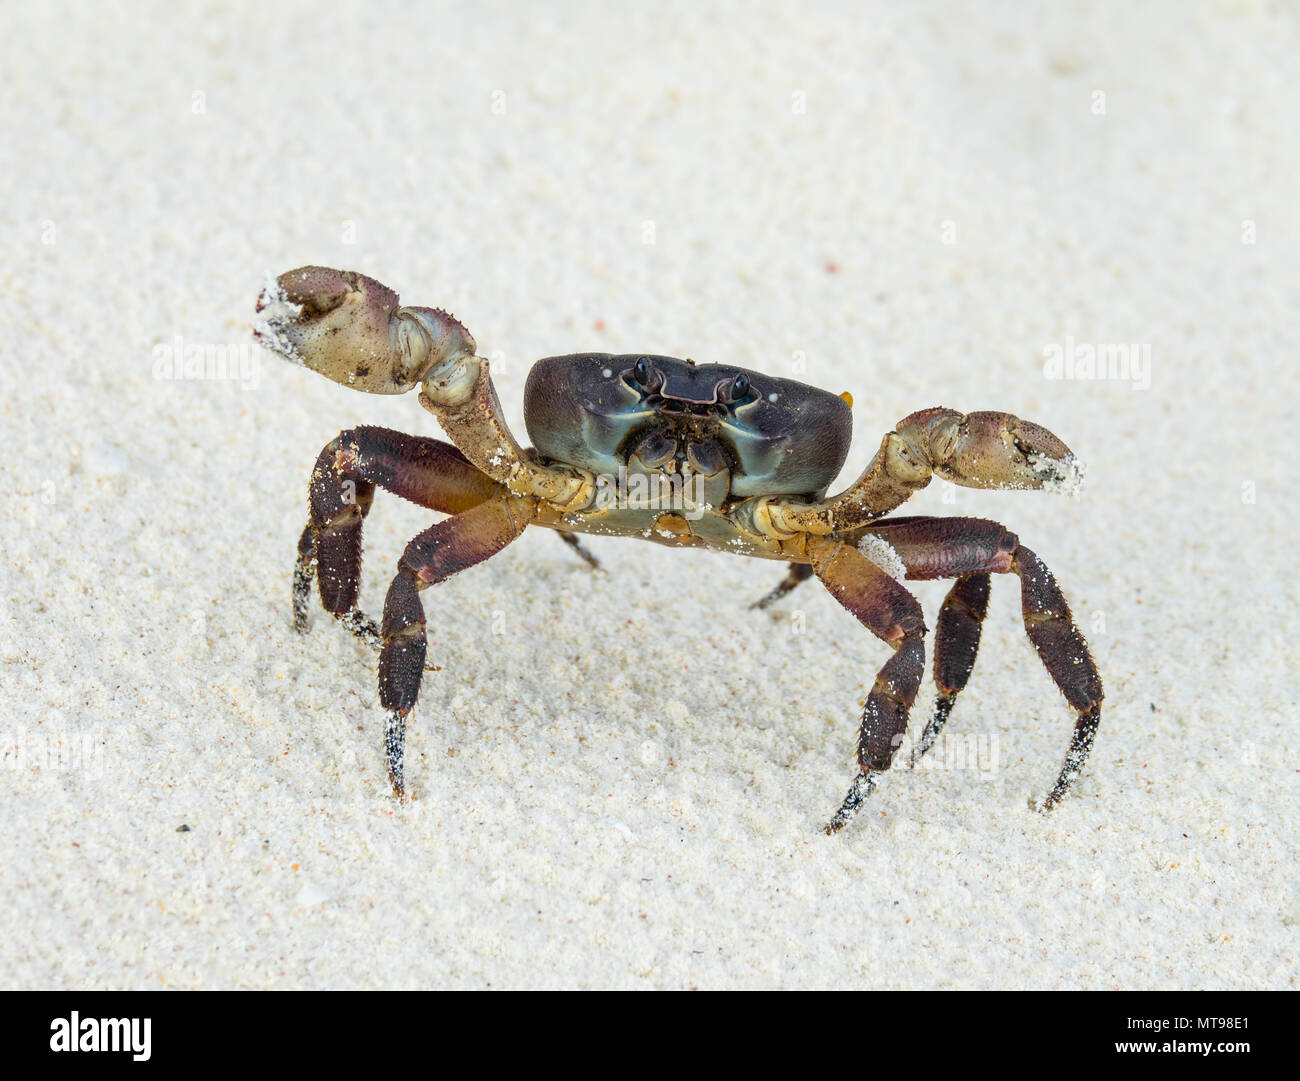 Krabbe mit angehobenen krallen sich zum Angriff bereit Stockfoto